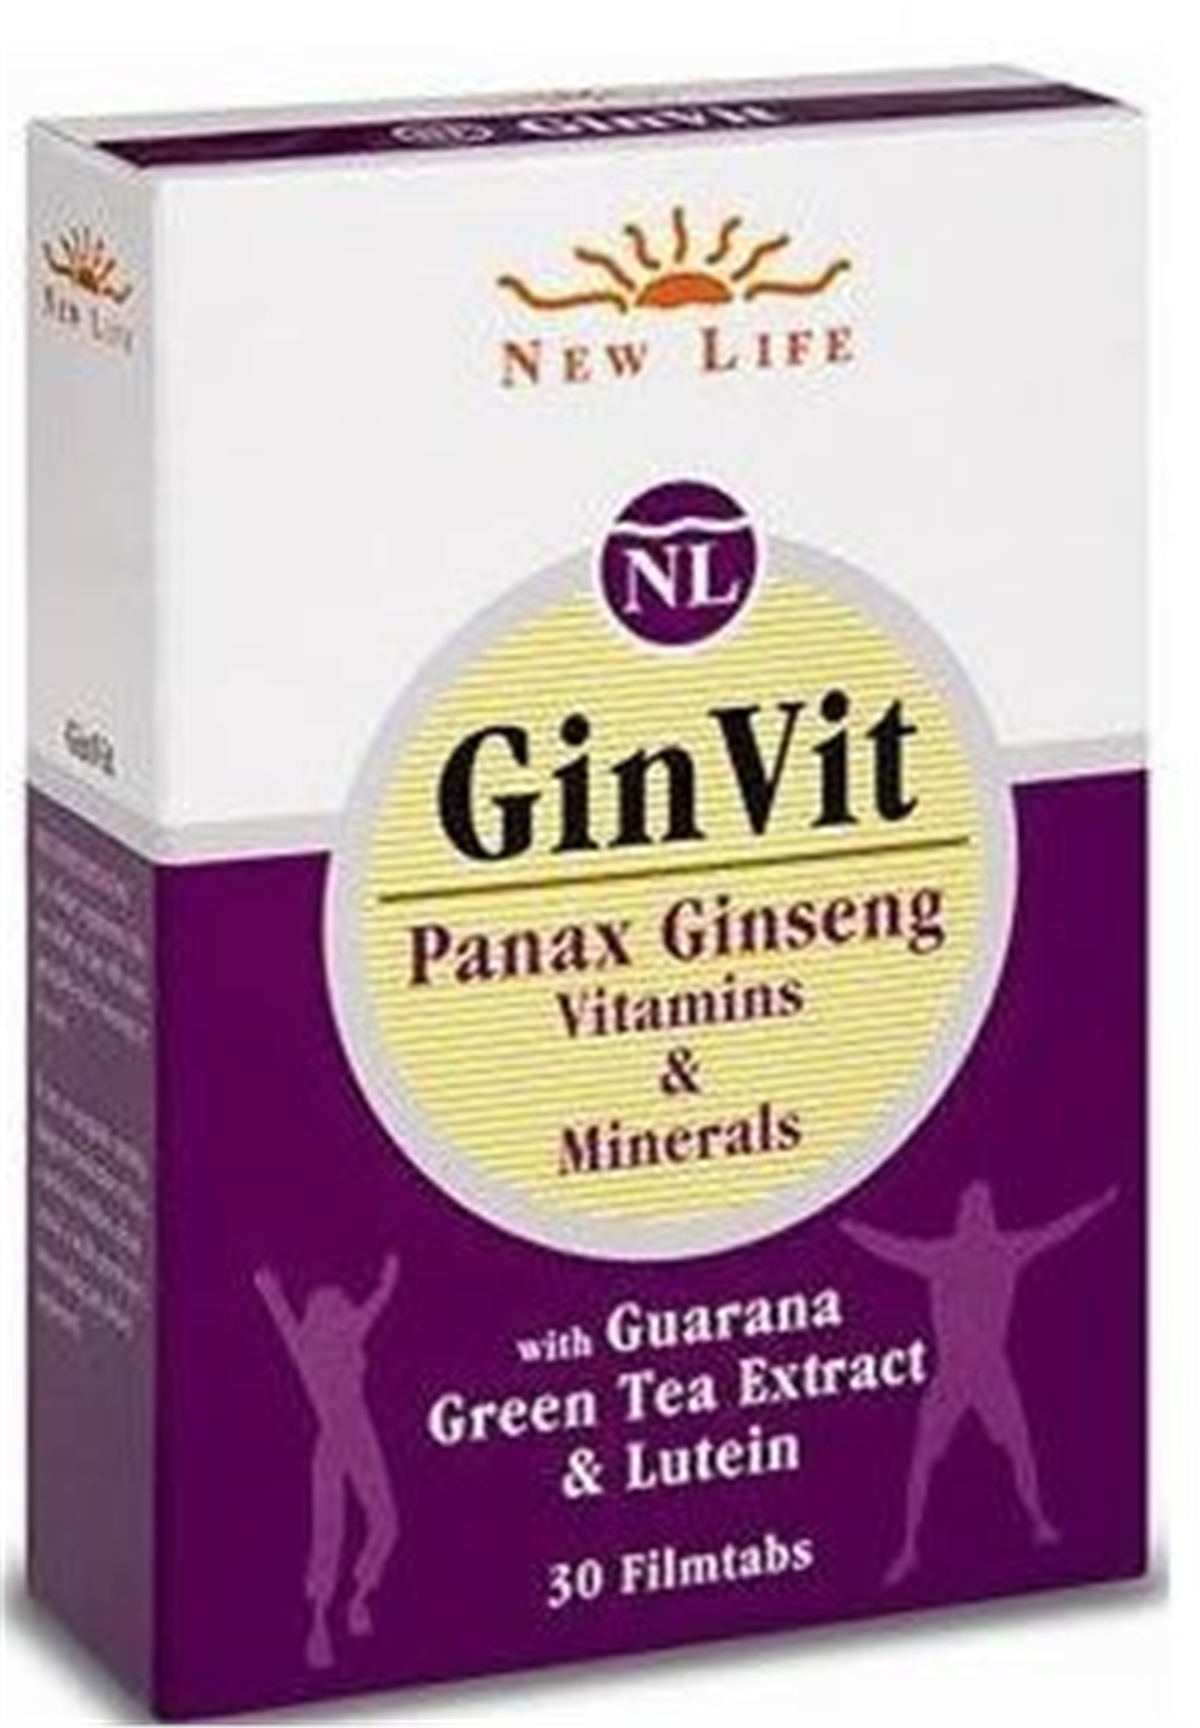 New life фф. Витамины New Life GINVIT. GINVIT LC. Ginseng Vitamin. New Life витамины Италия.